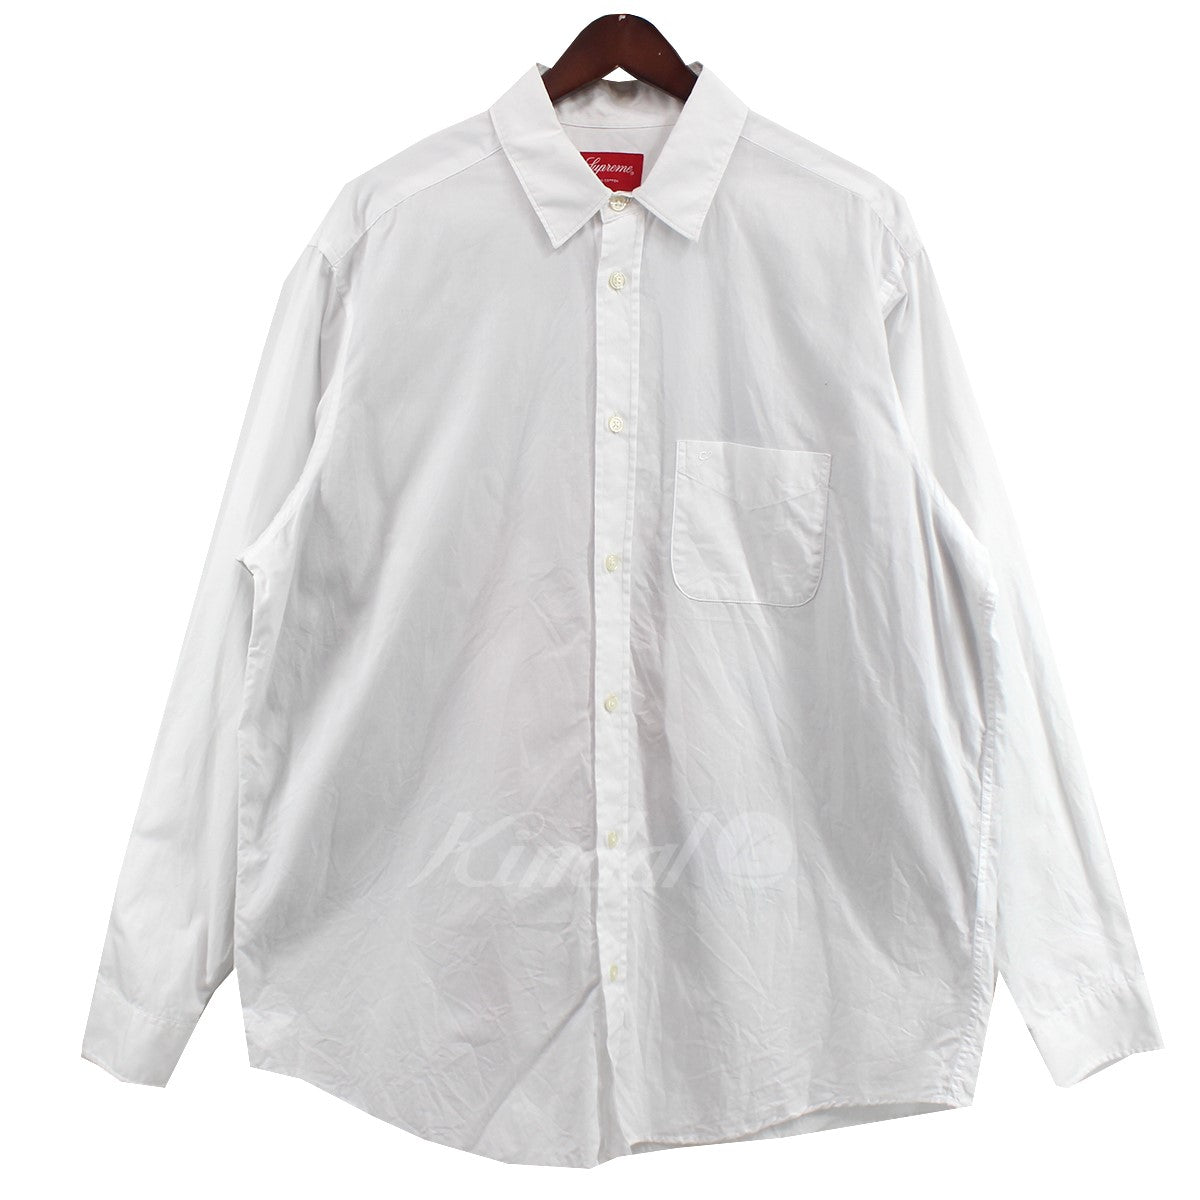 SUPREME(シュプリーム) 20SS Leigh Bowery Airbrushed Shirt リーバウリー シャツ